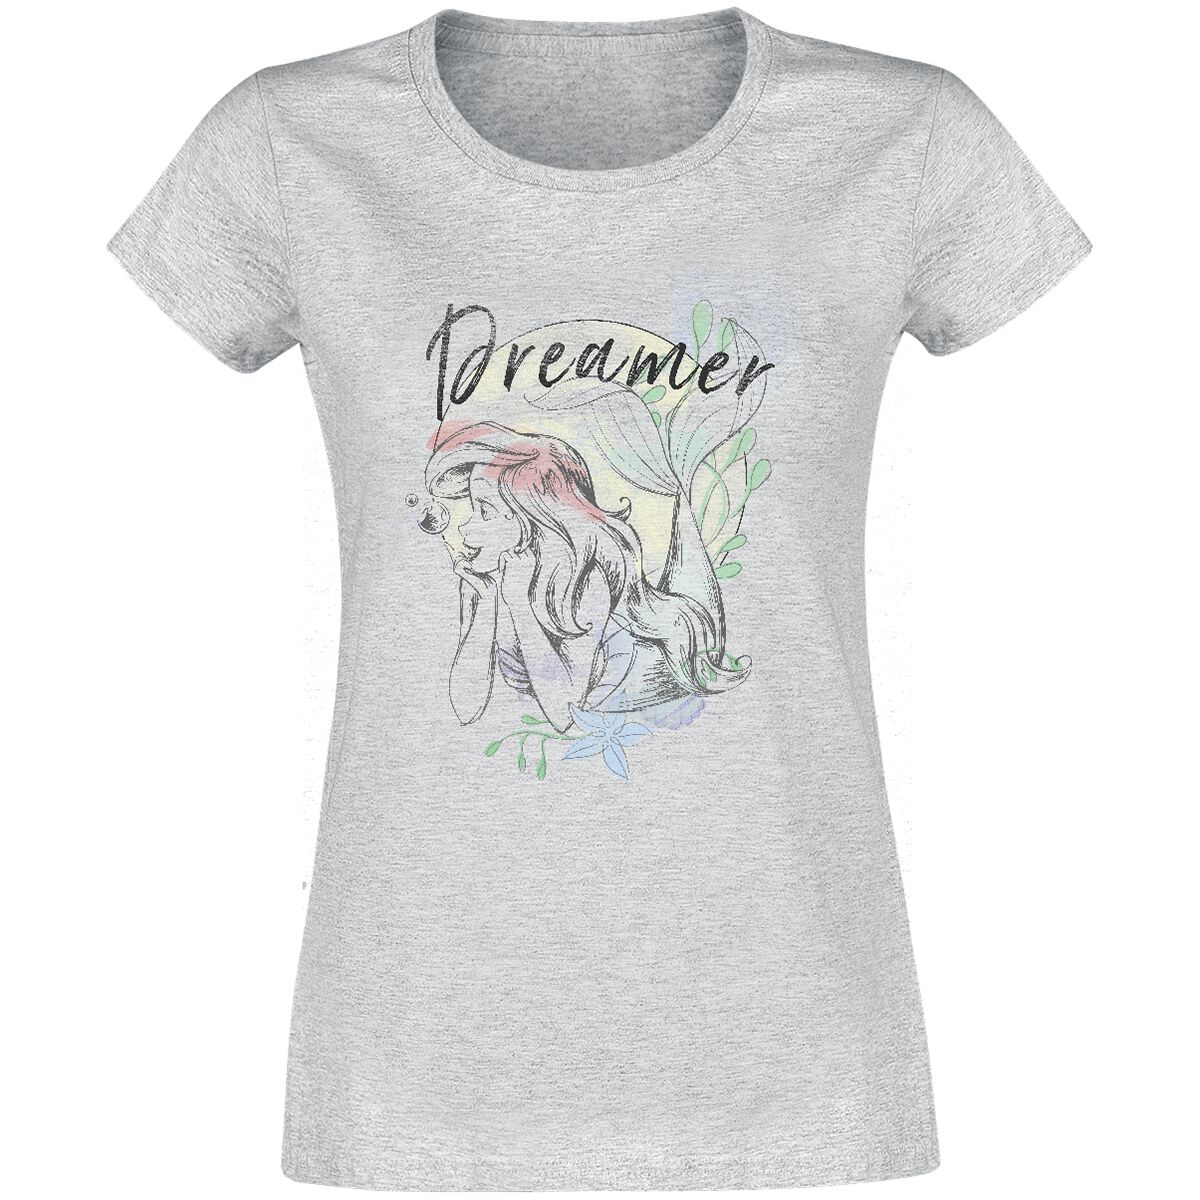 The Little Mermaid Dreamer T-Shirt heather grey